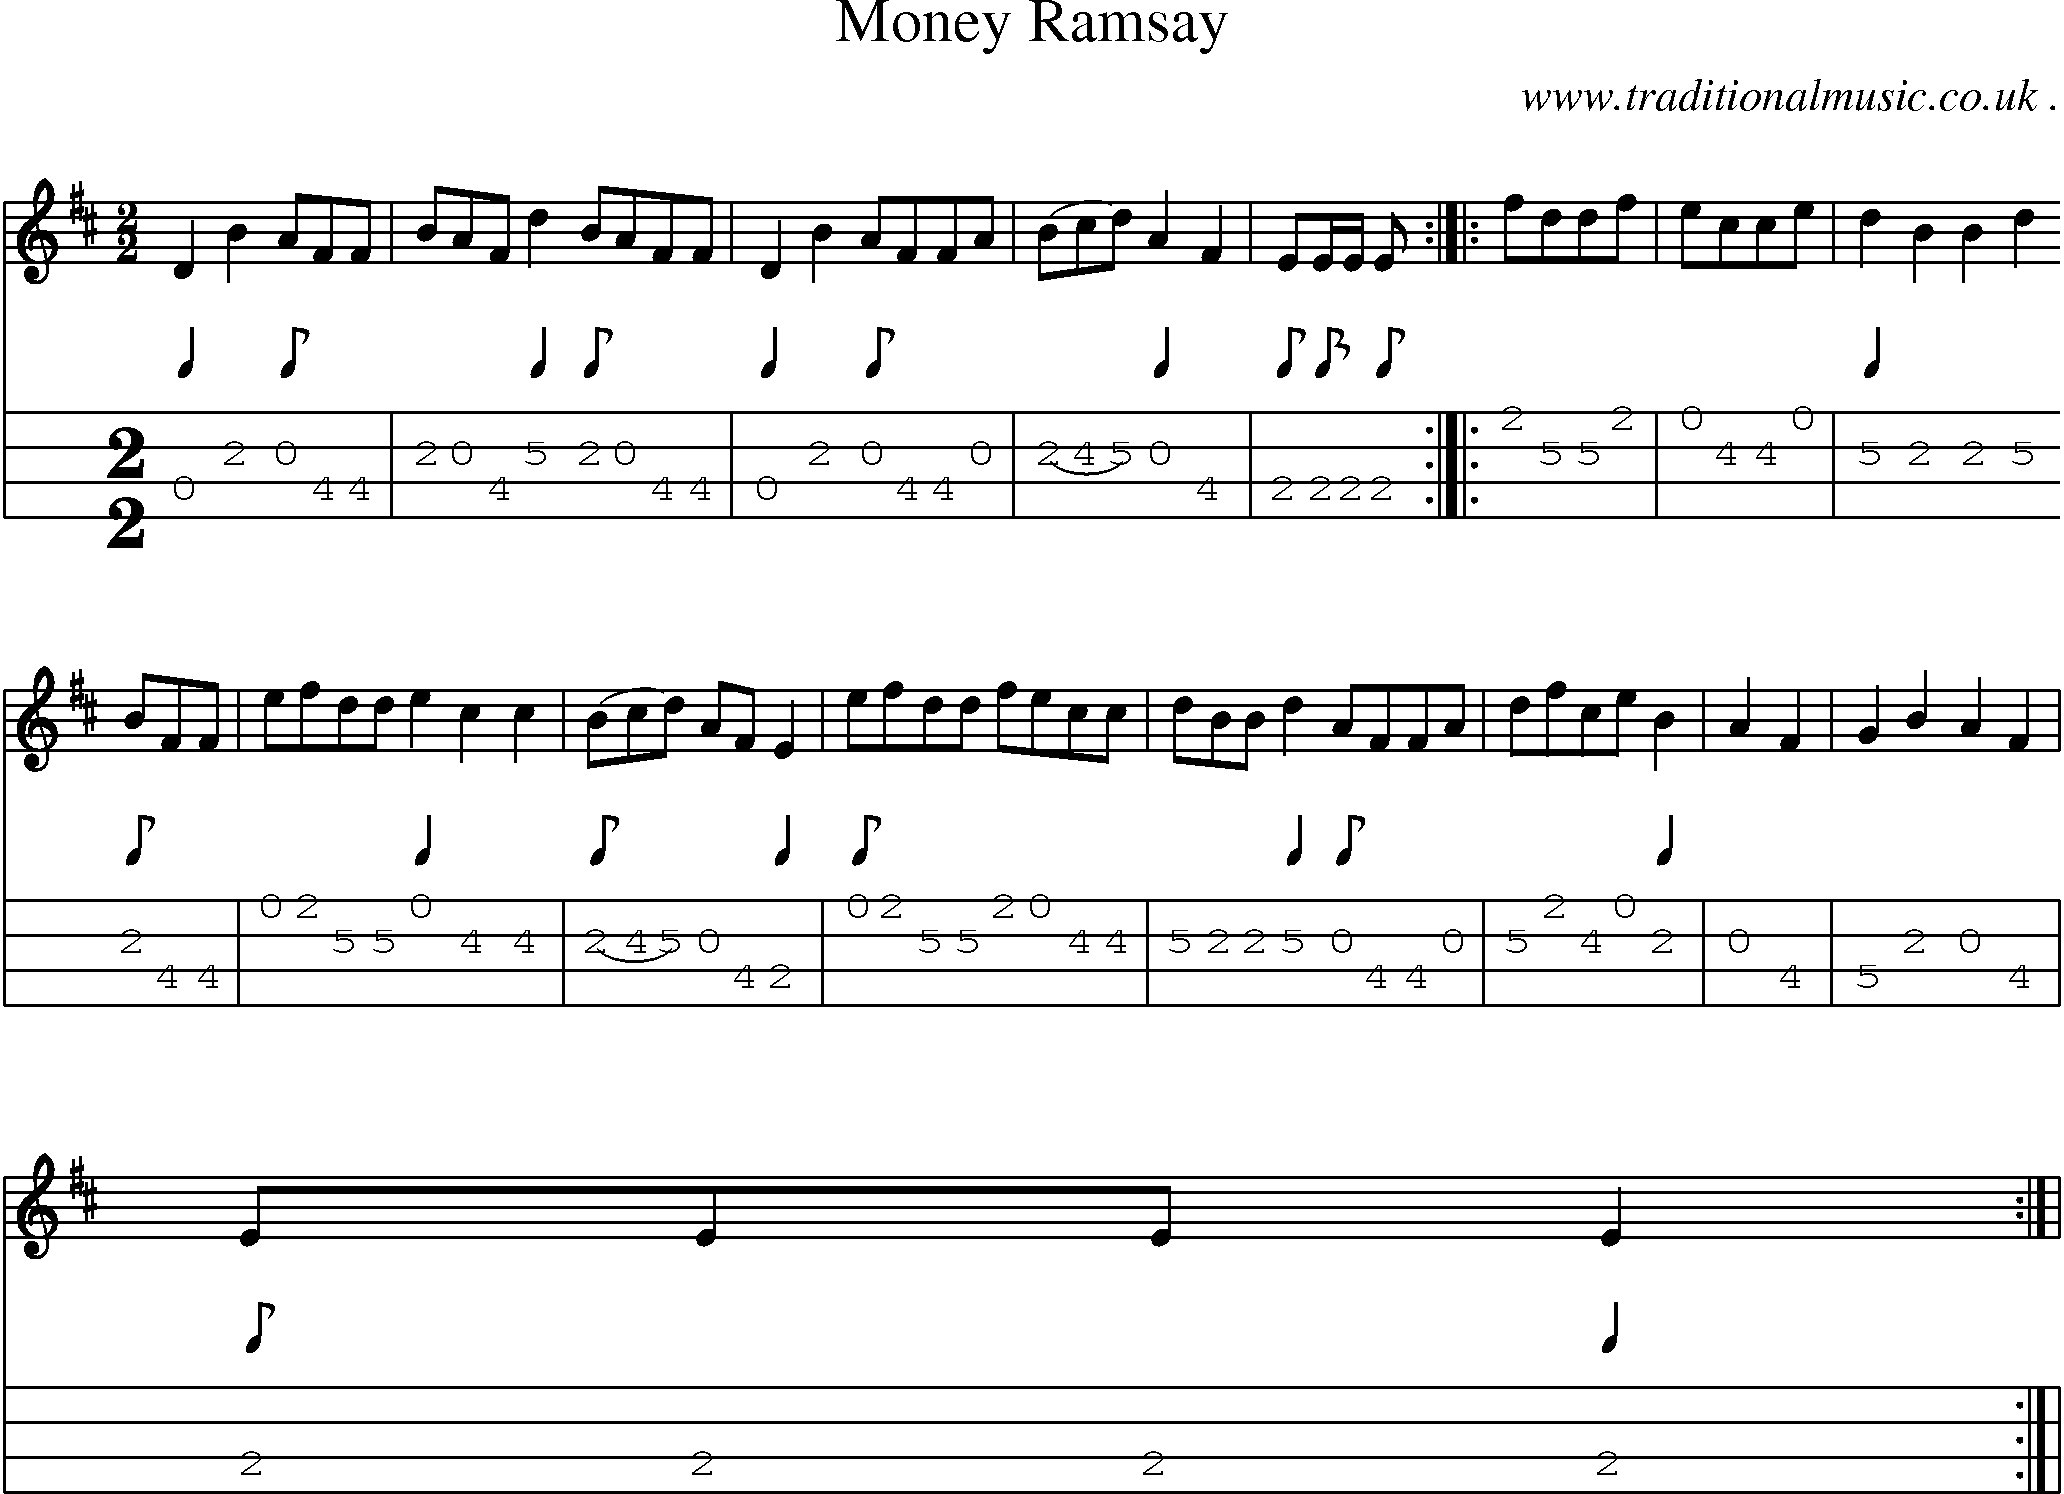 Sheet-Music and Mandolin Tabs for Money Ramsay